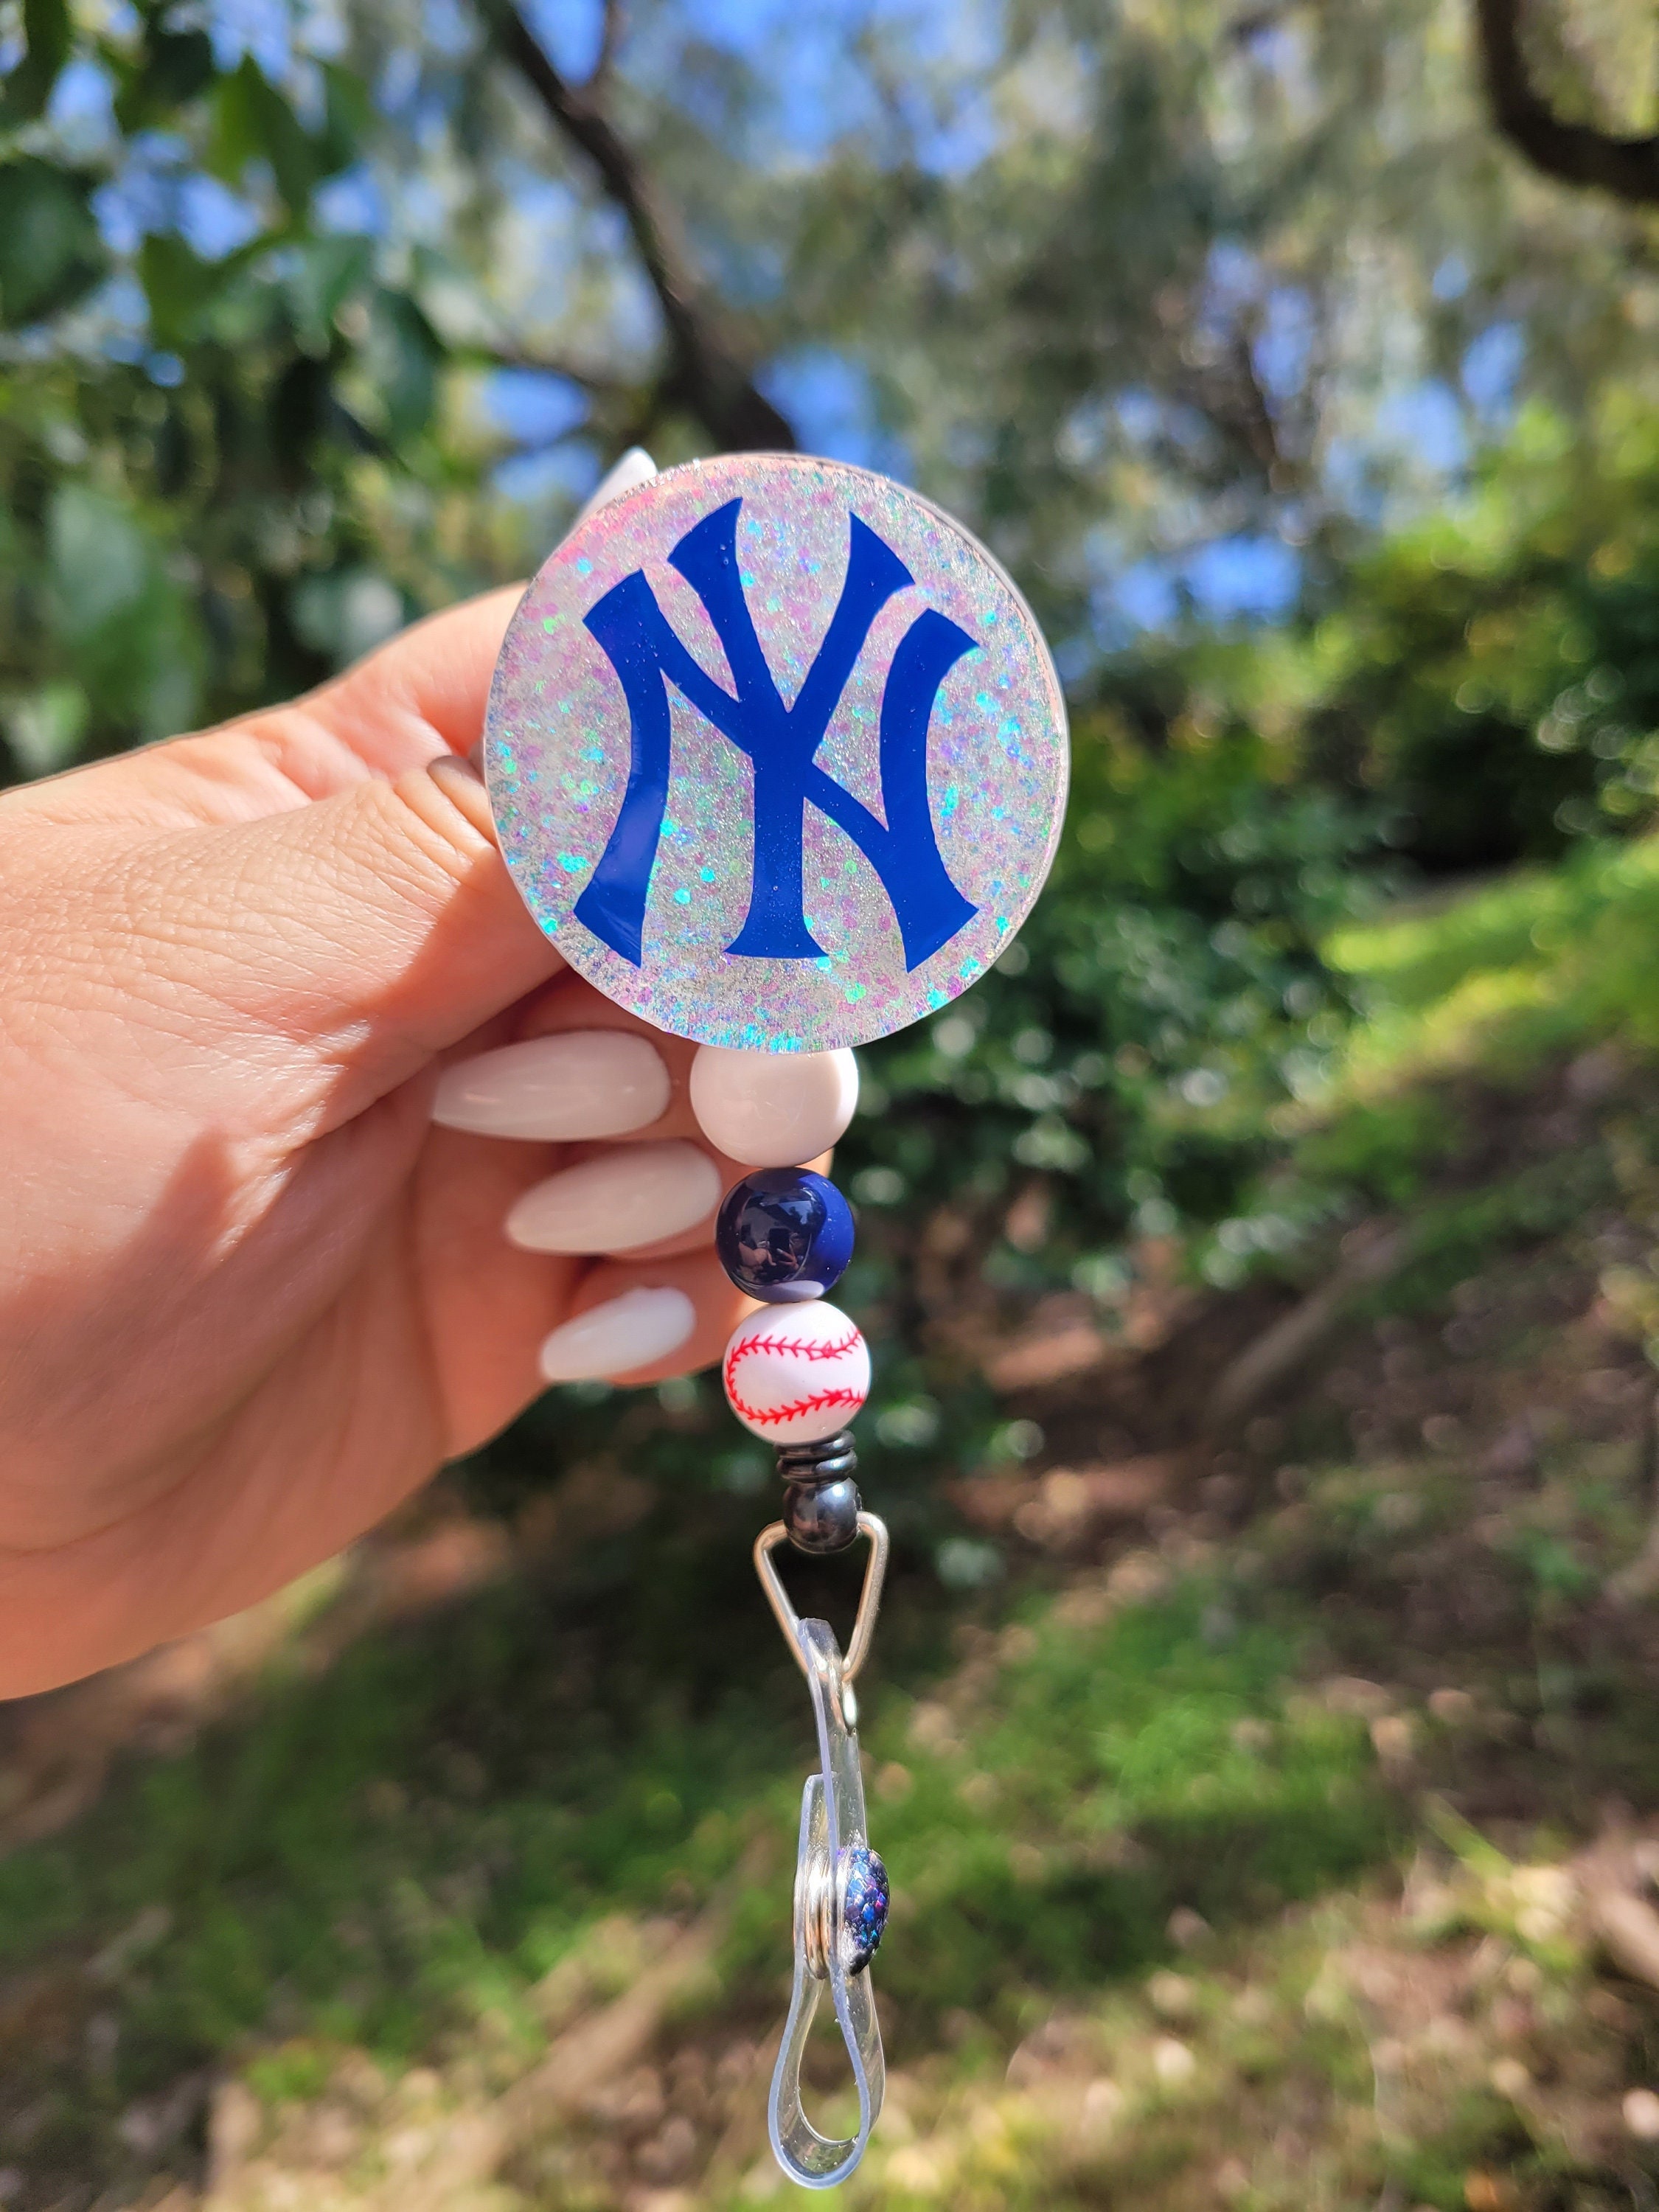 NY Badge Reel/ Cute Baseball Gift/retractable ID Holder 